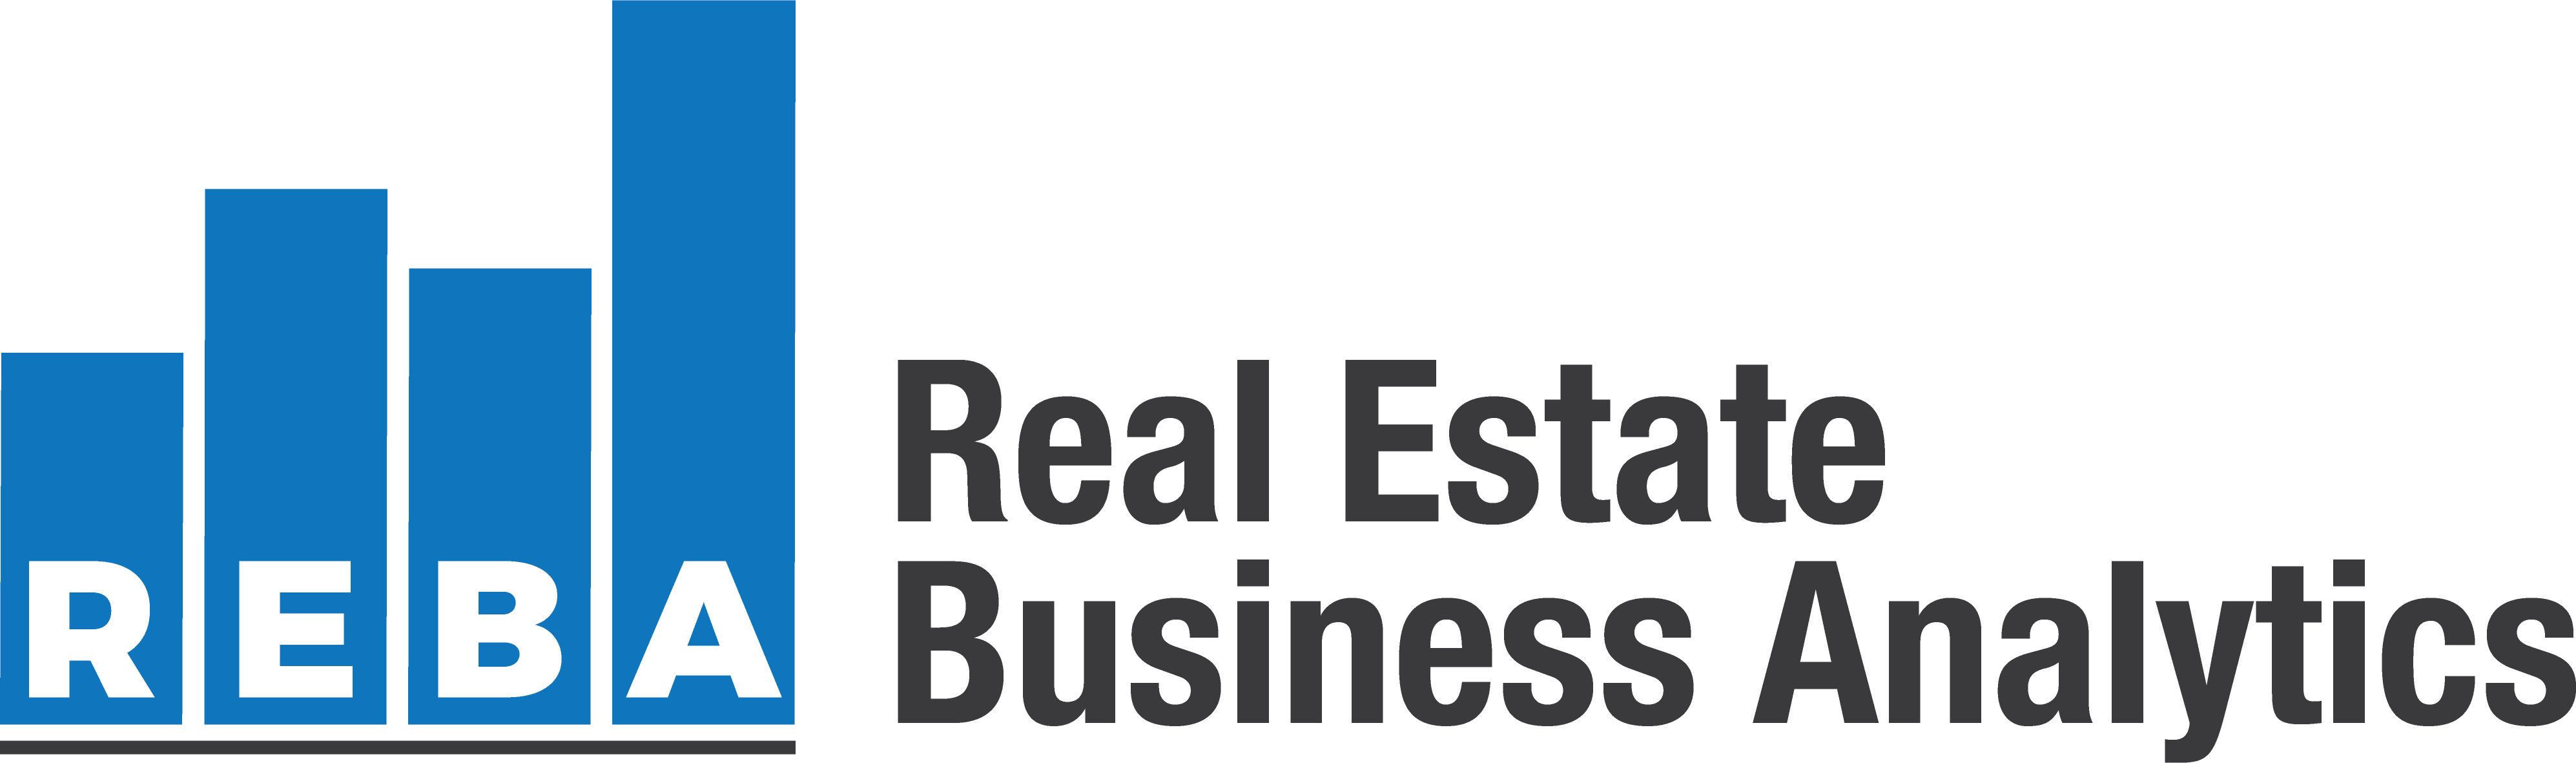 Real Estate Business Analytics Logo